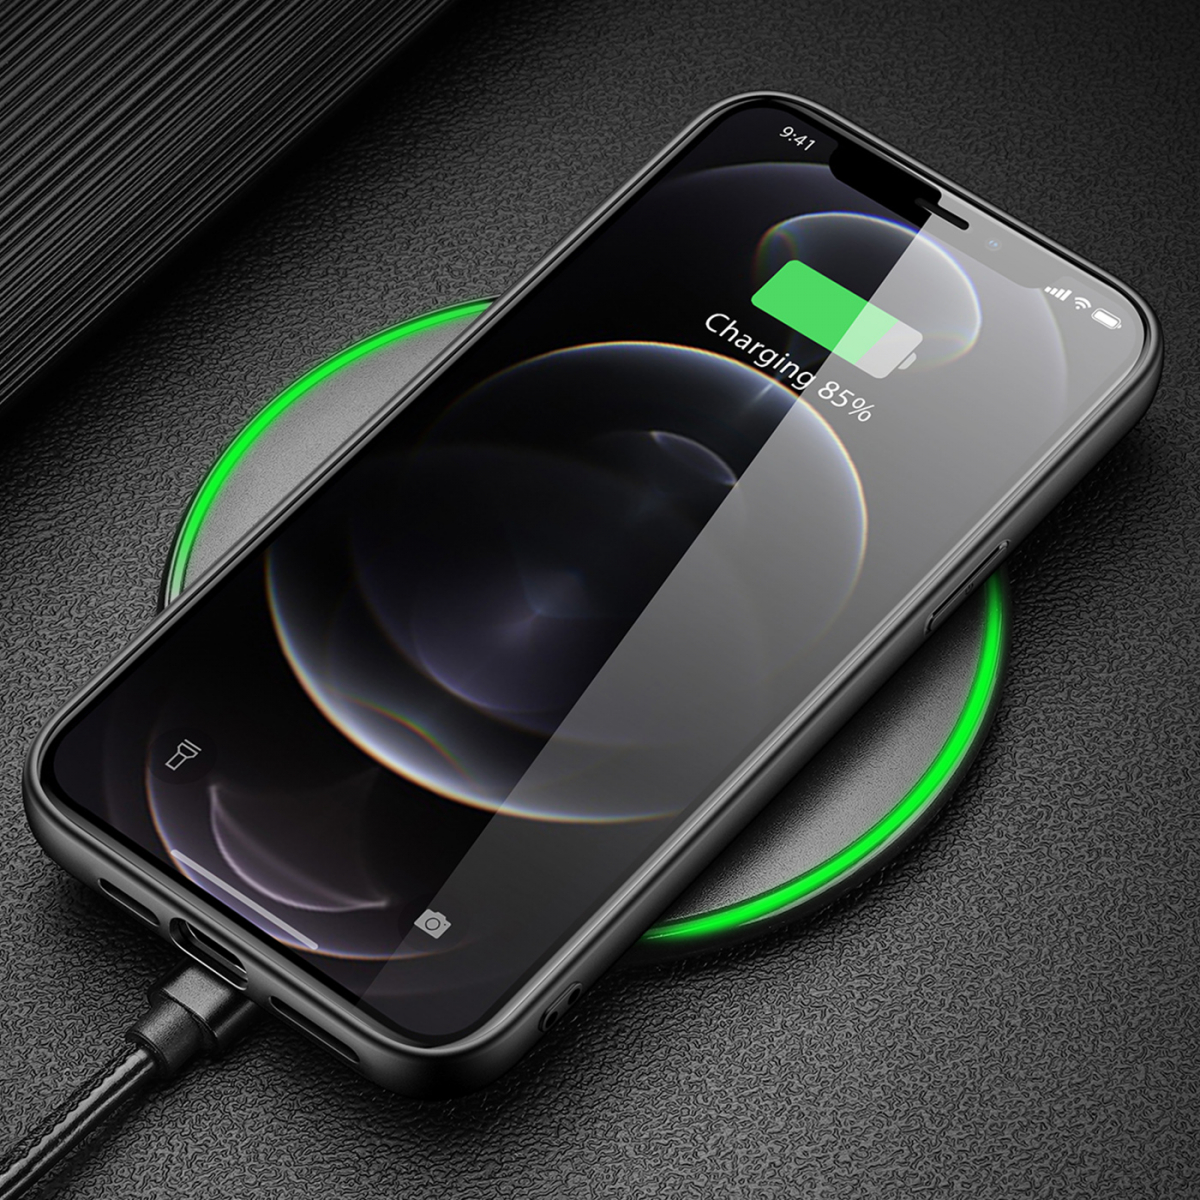 DUX DUCIS Fino mobilskal till iPhone 13 Pro Max, svart